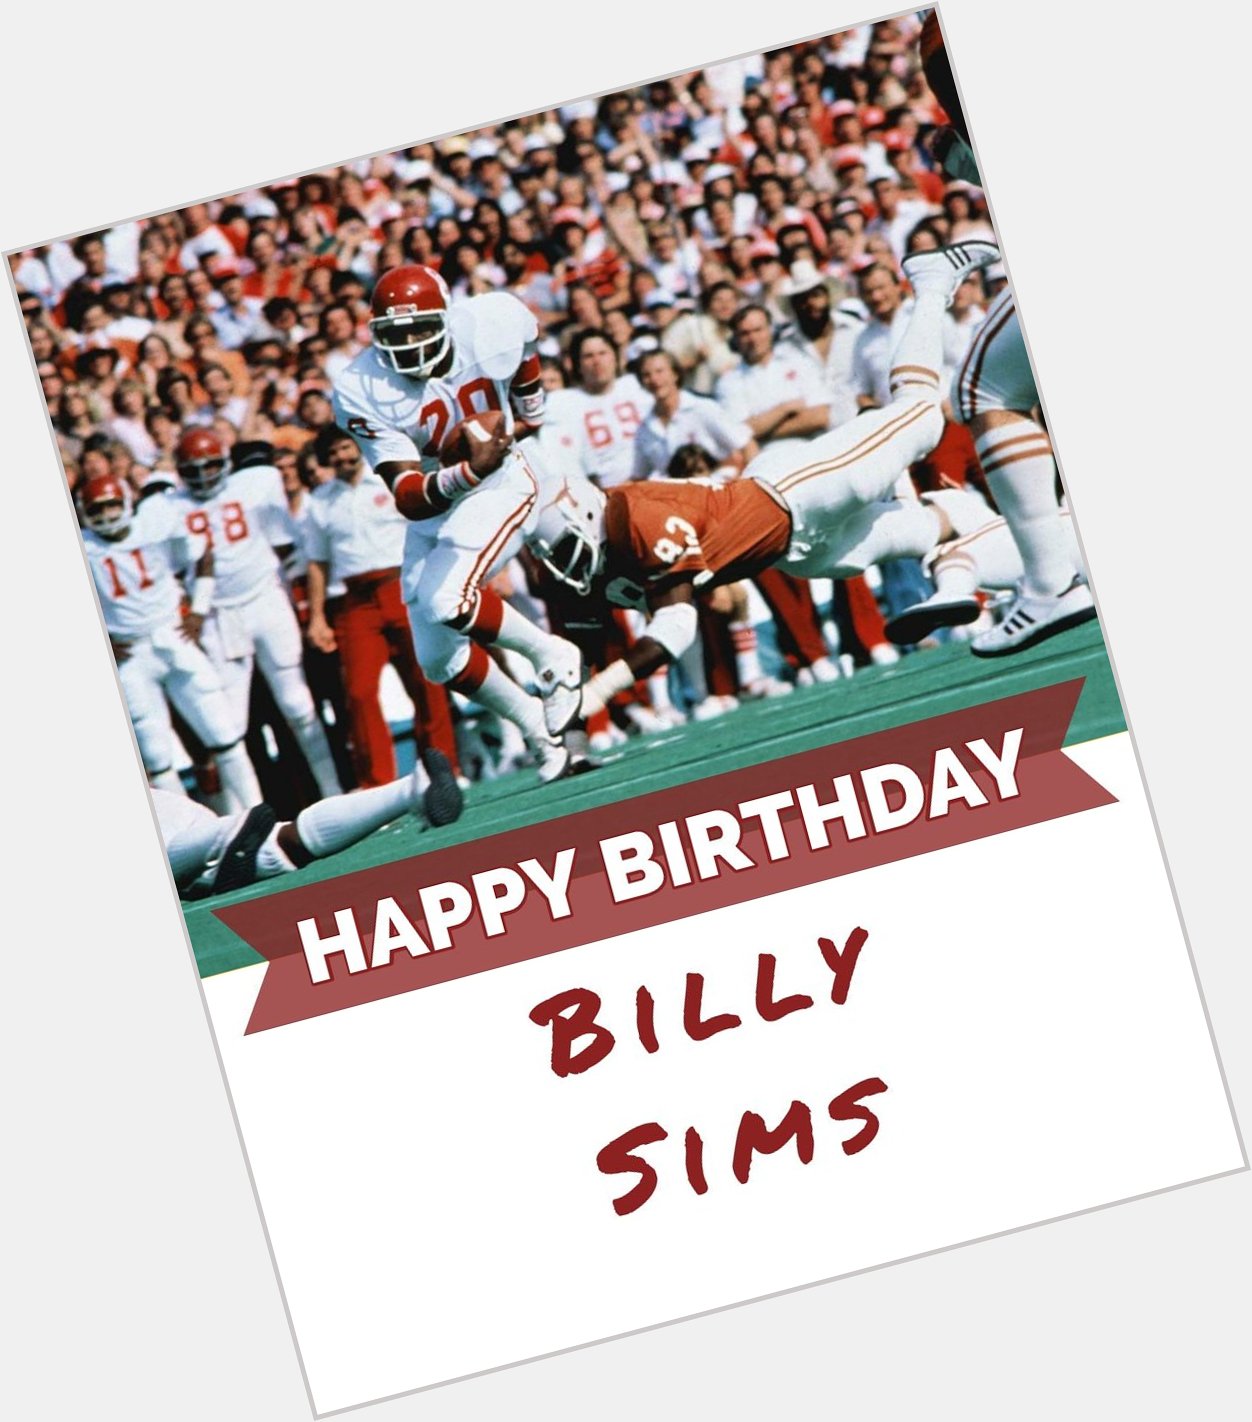 Happy Birthday Billy Sims! 